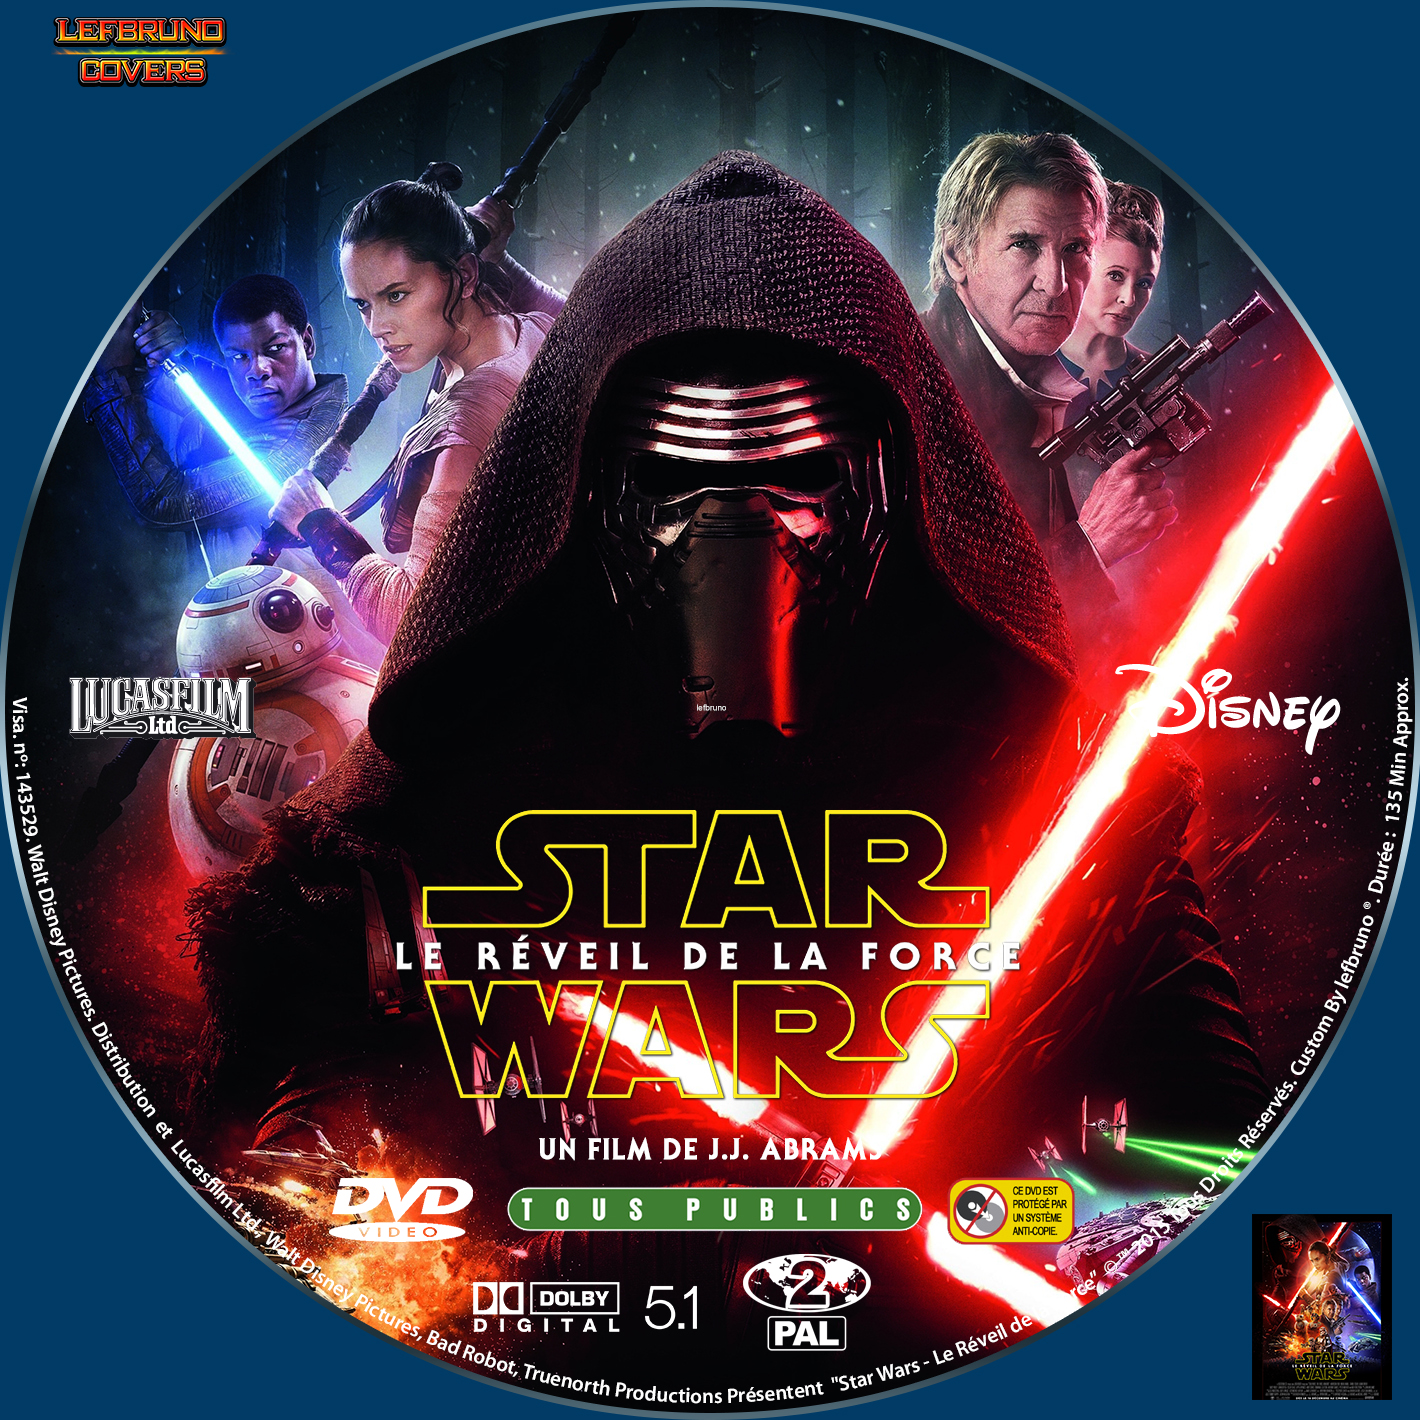 Star Wars: Episode VII Le rveil de la force custom